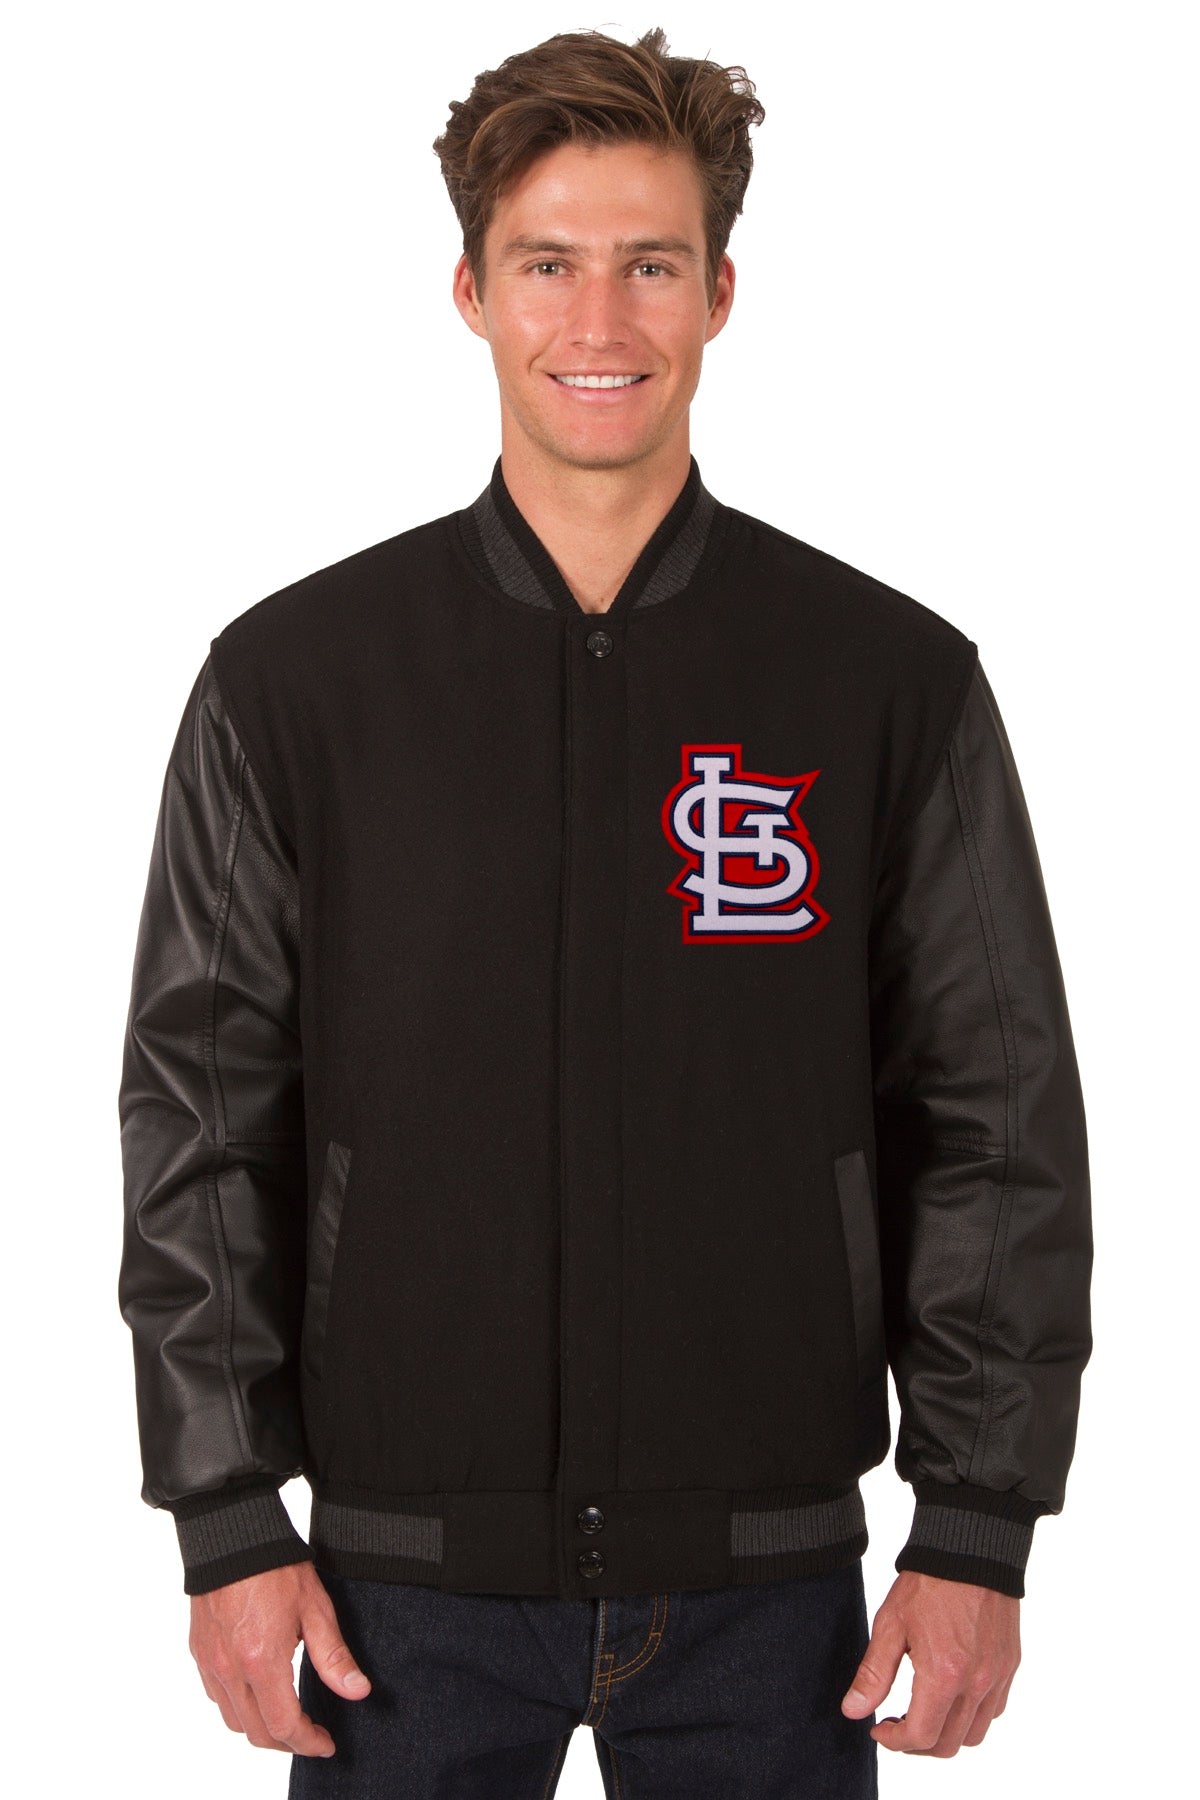 Black White Louisville Cardinals Leather Jacket - Maker of Jacket